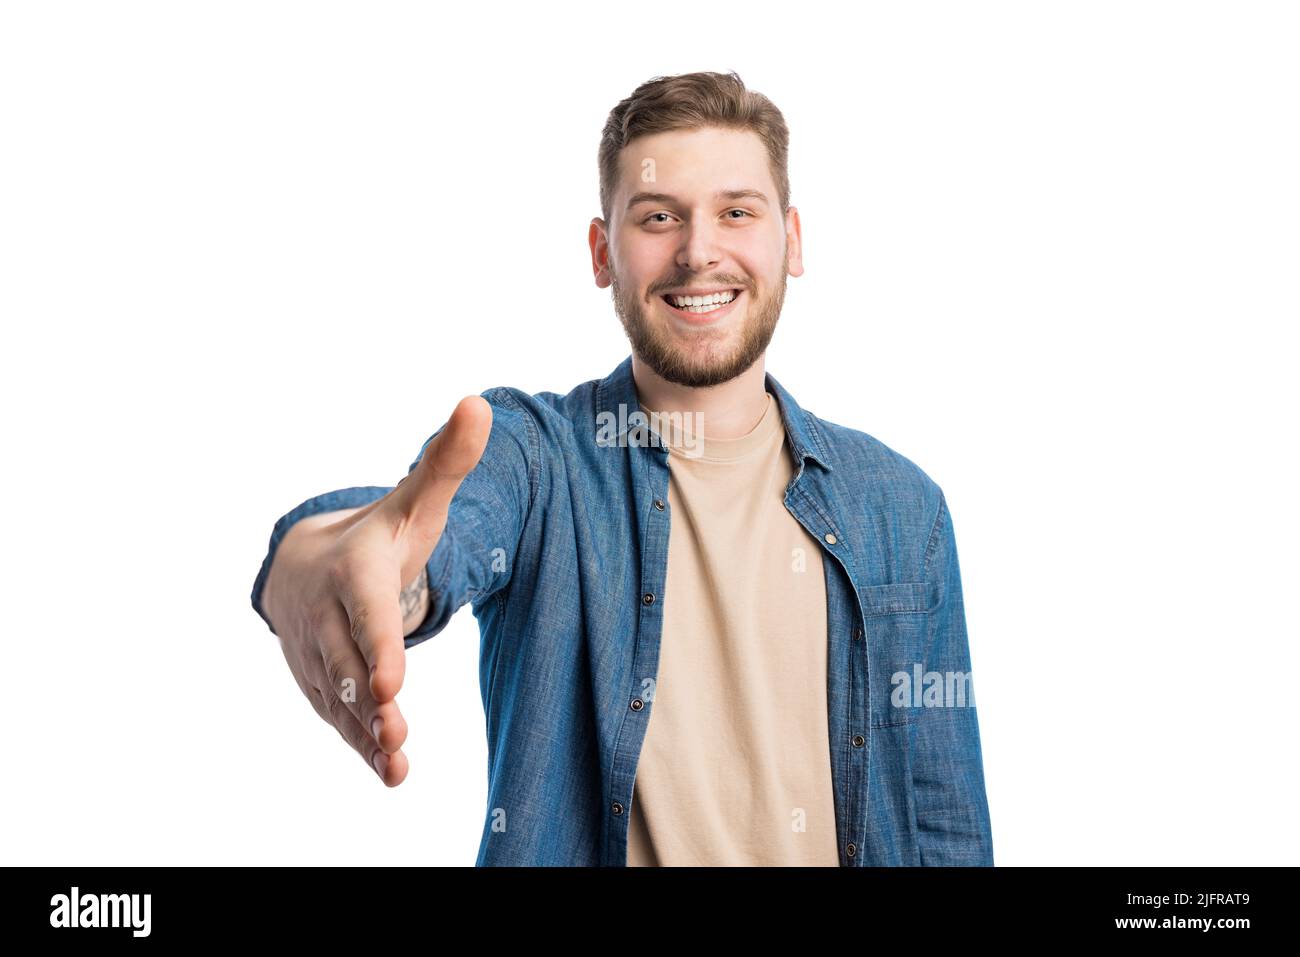 Man with offering handshake Stock Photo